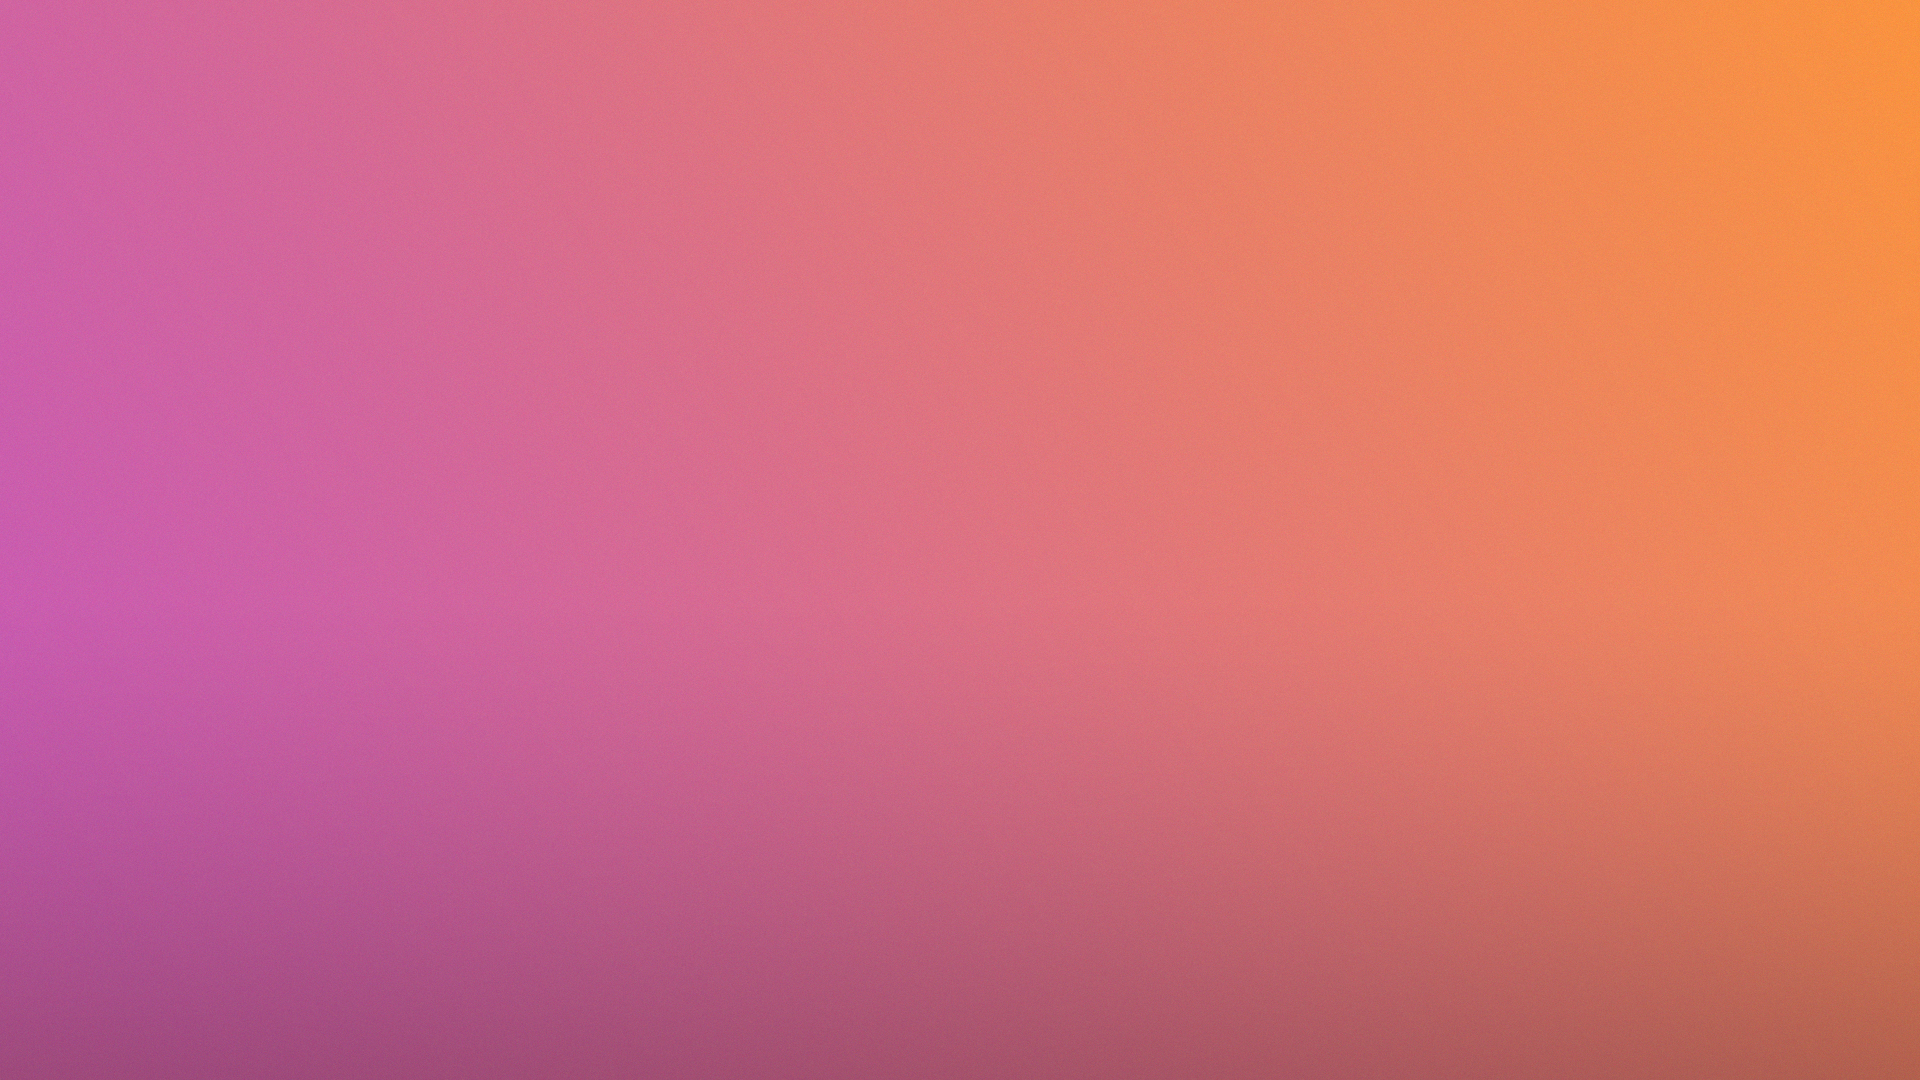 General 1920x1080 minimalism gradient pink orange